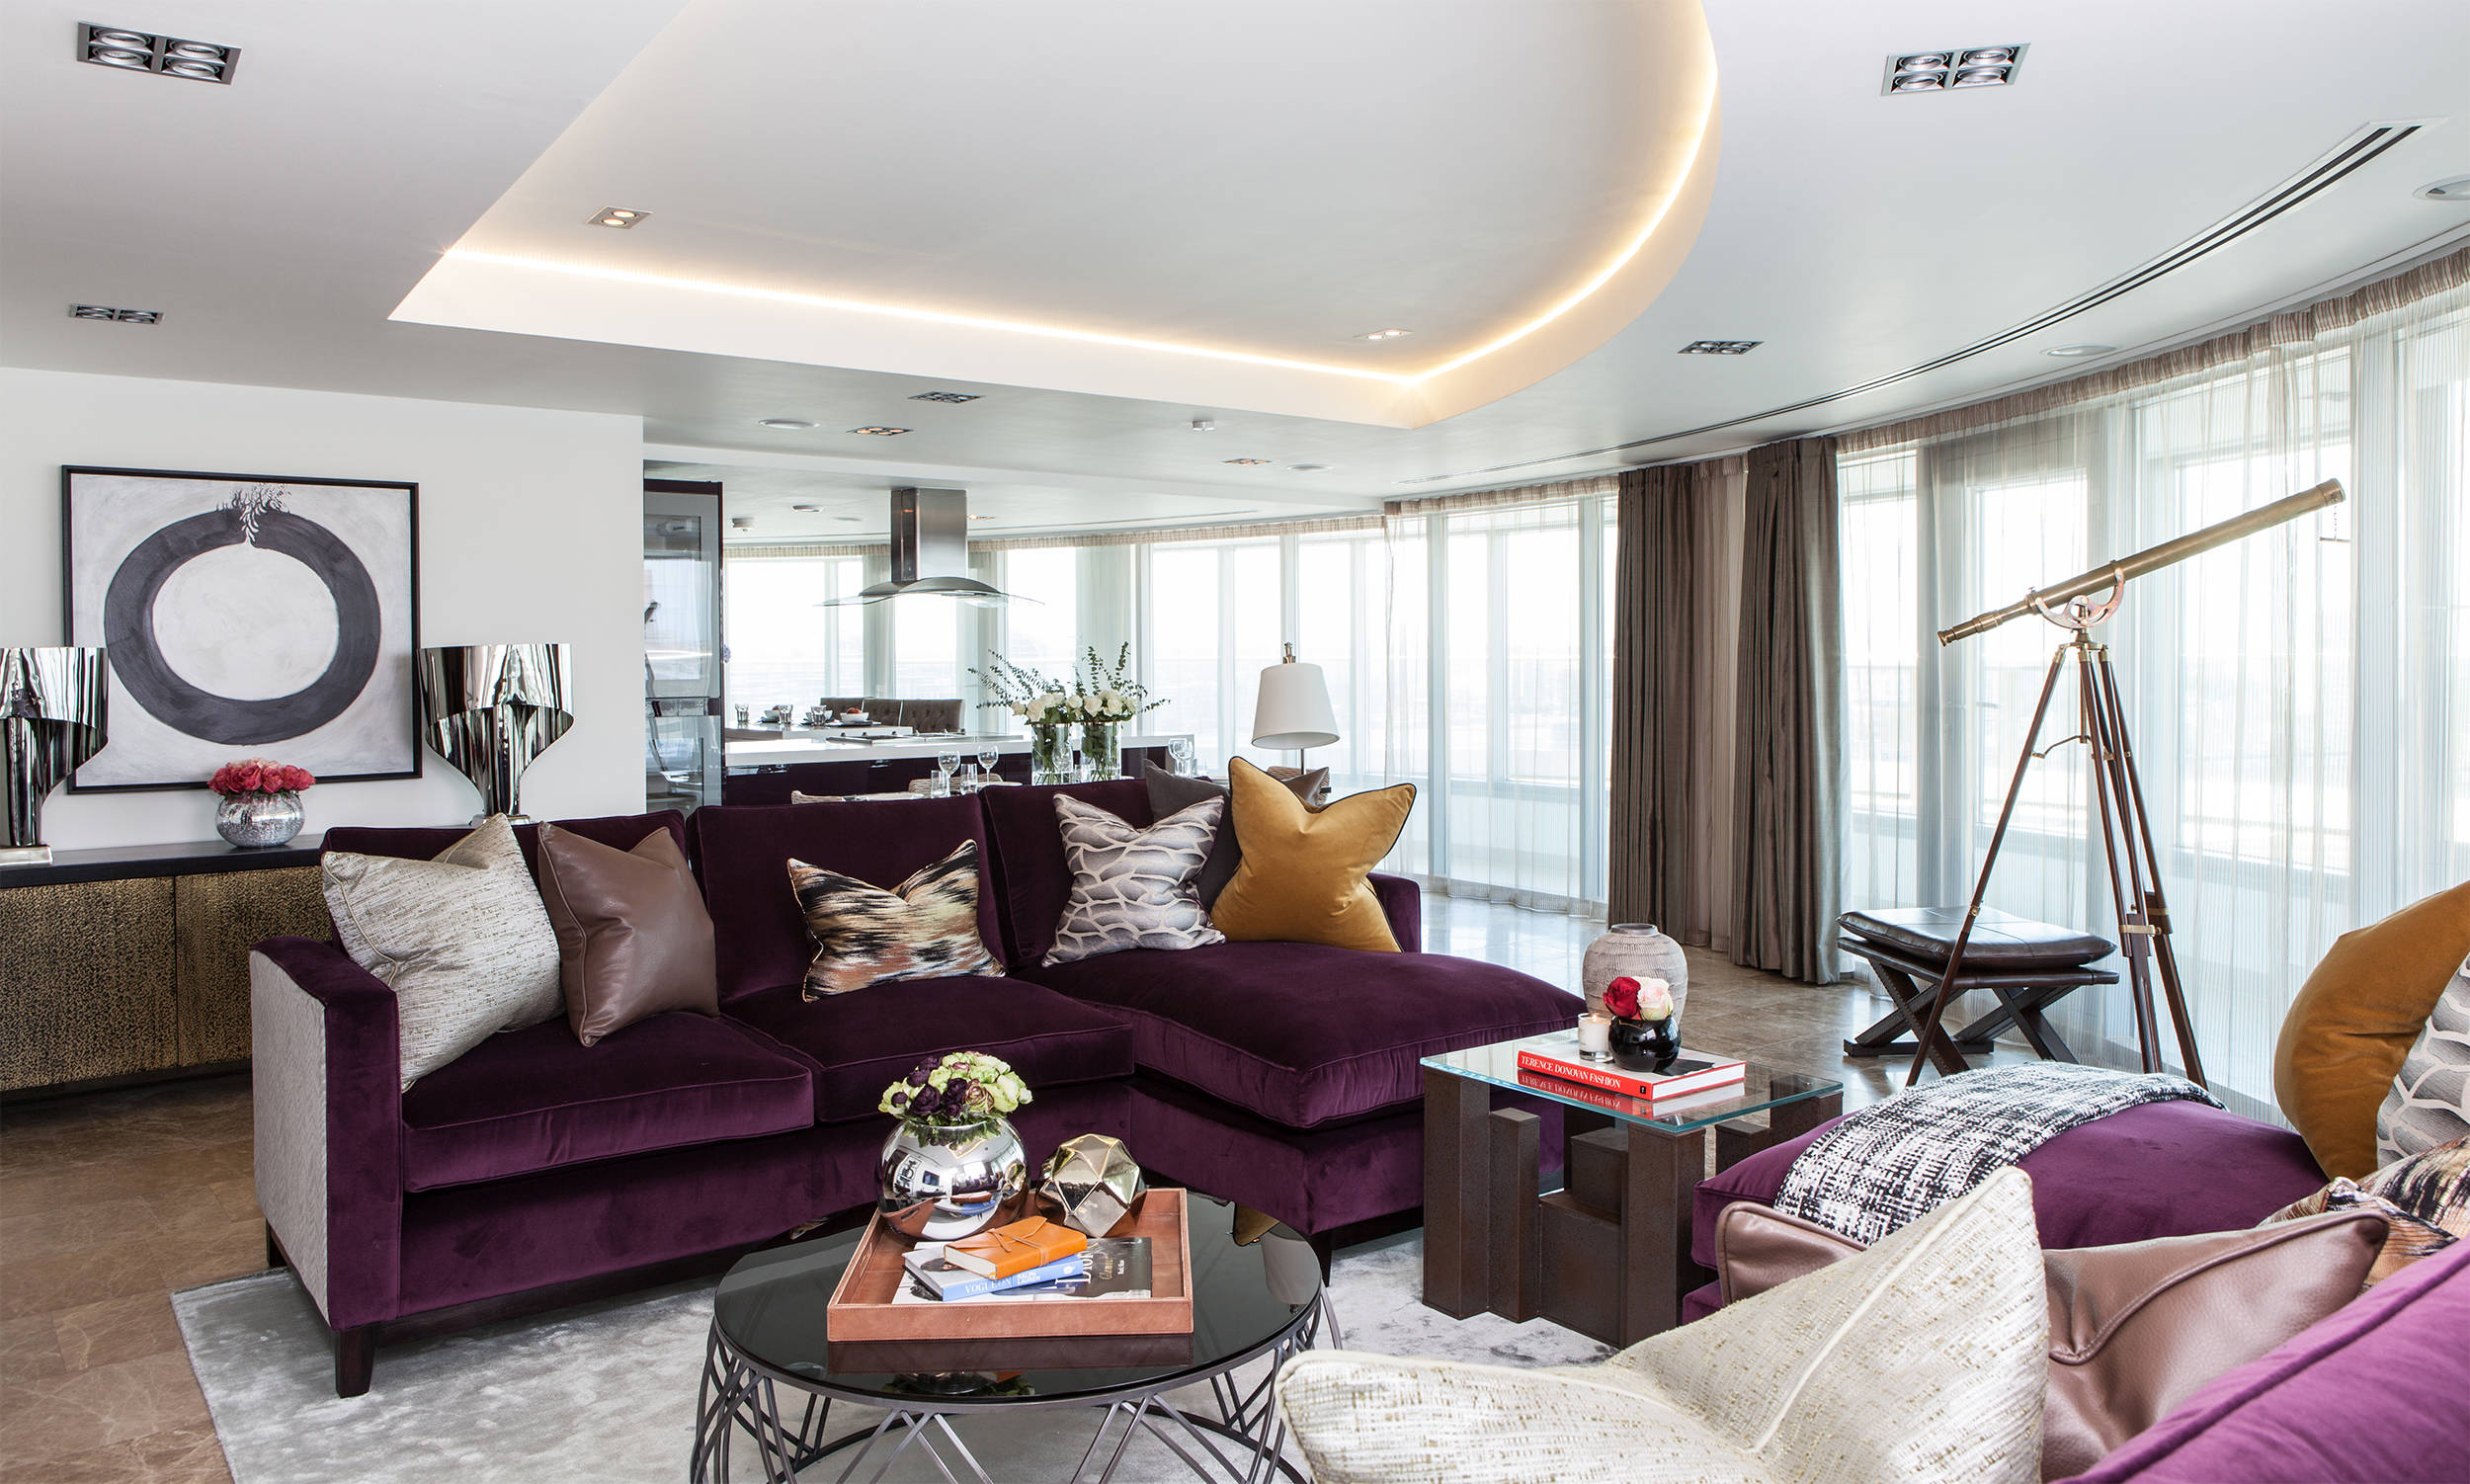 75 Purple Living Room Ideas You Ll Love